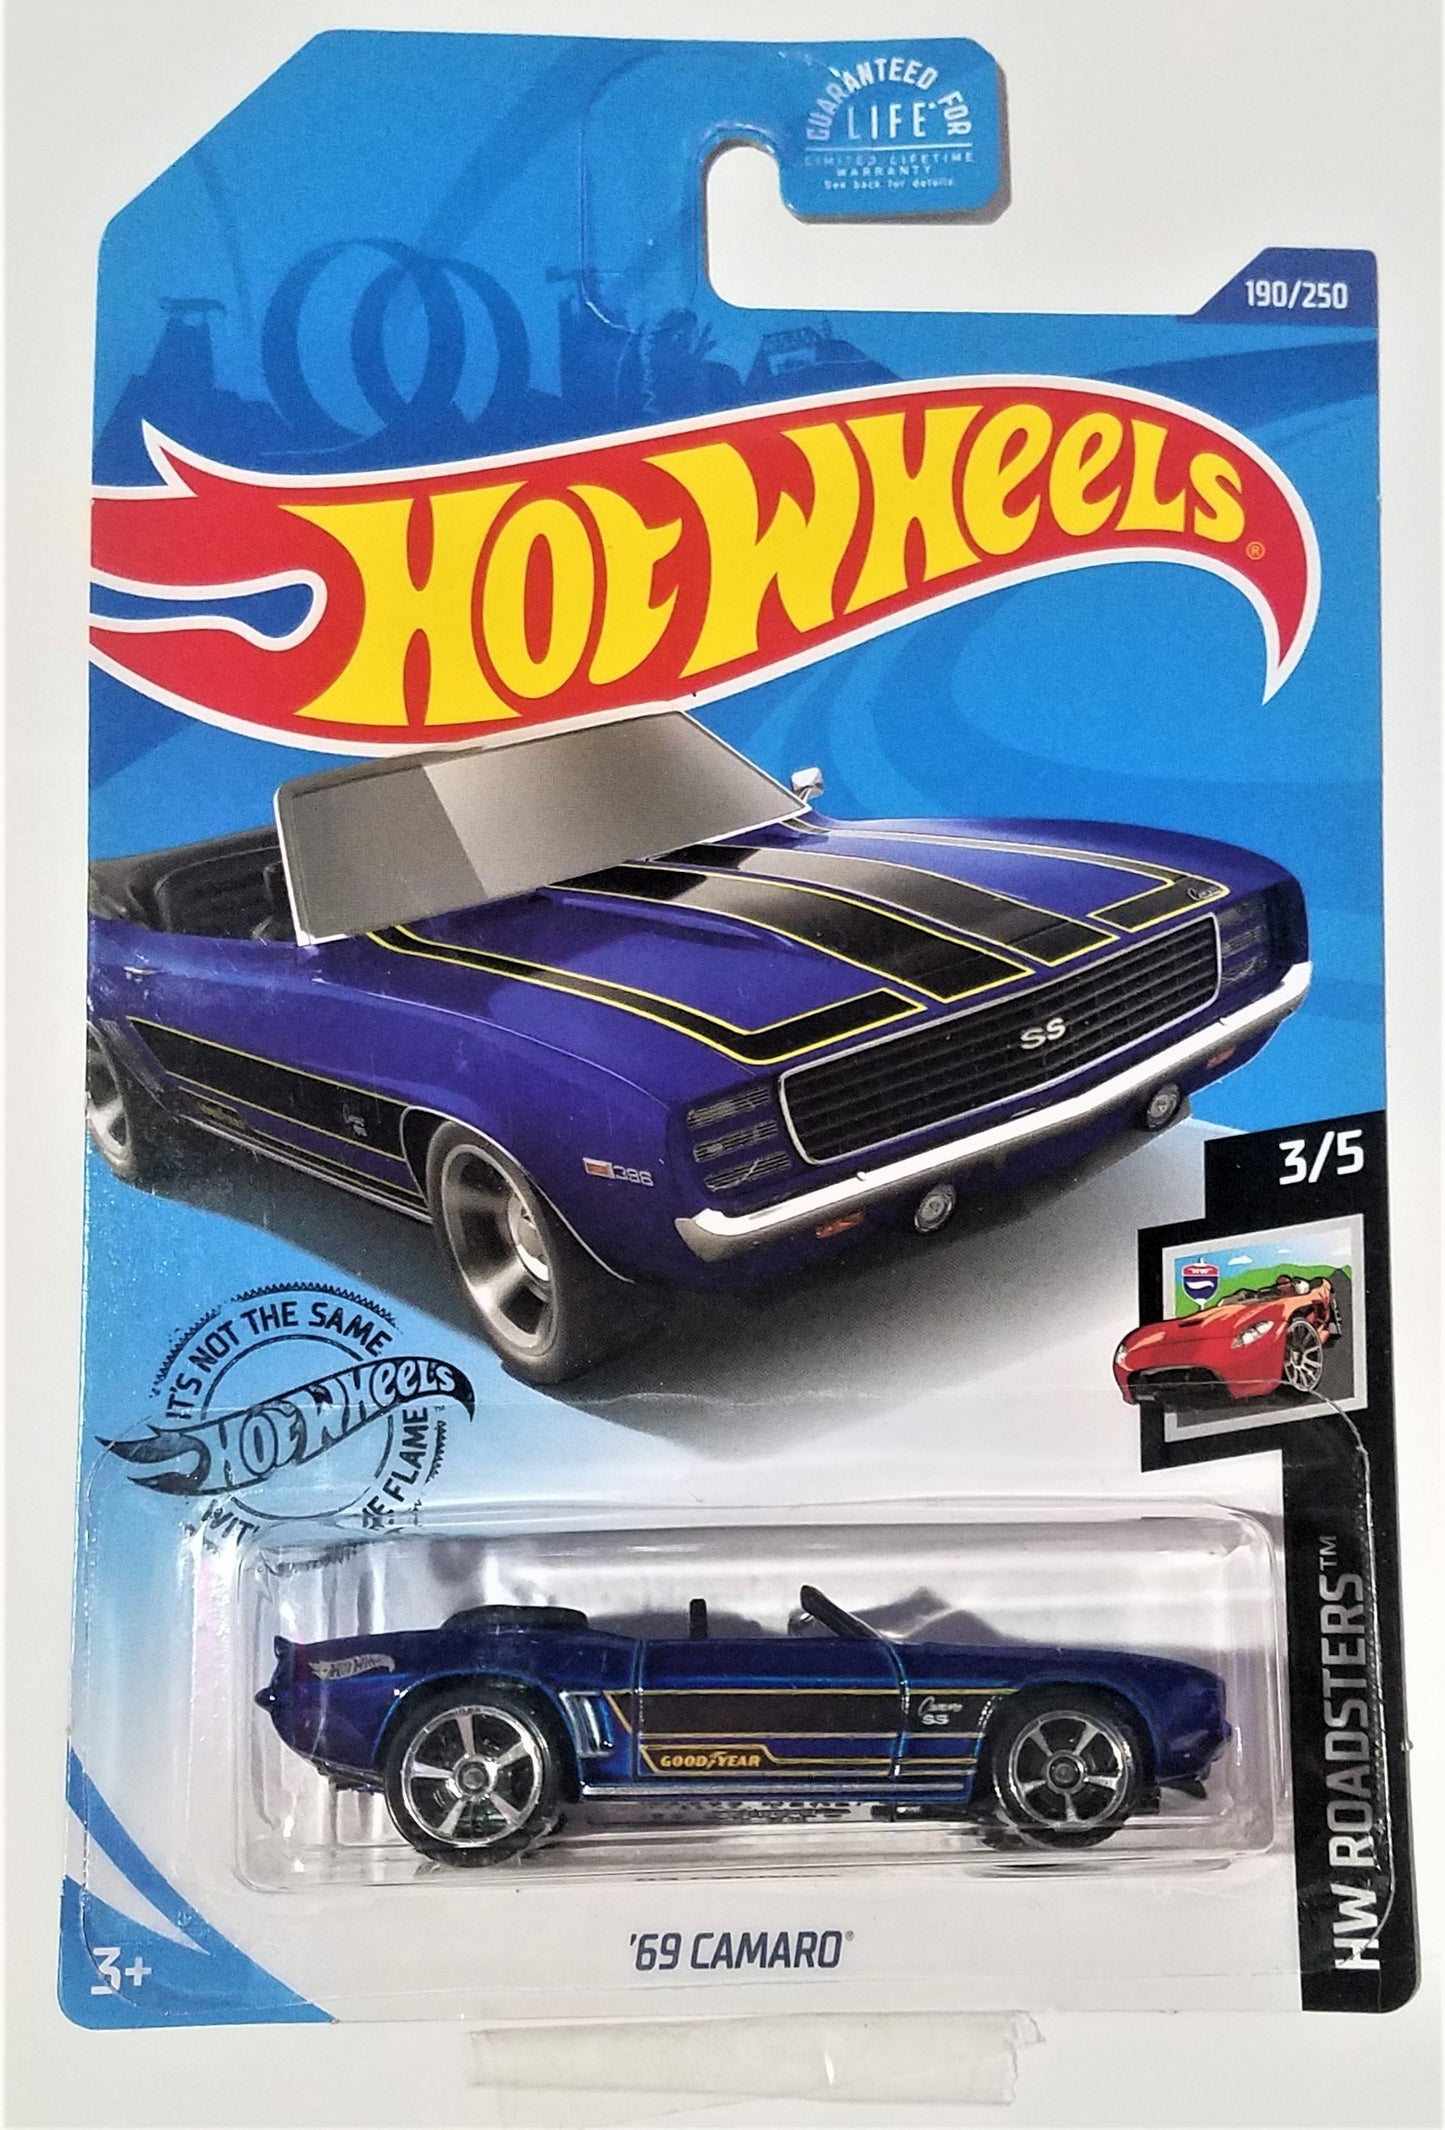 Hot Wheels 2020 - Collector # 190/250 - HW Roadsters 3/5 - '69 Camaro (Convertible) Blue